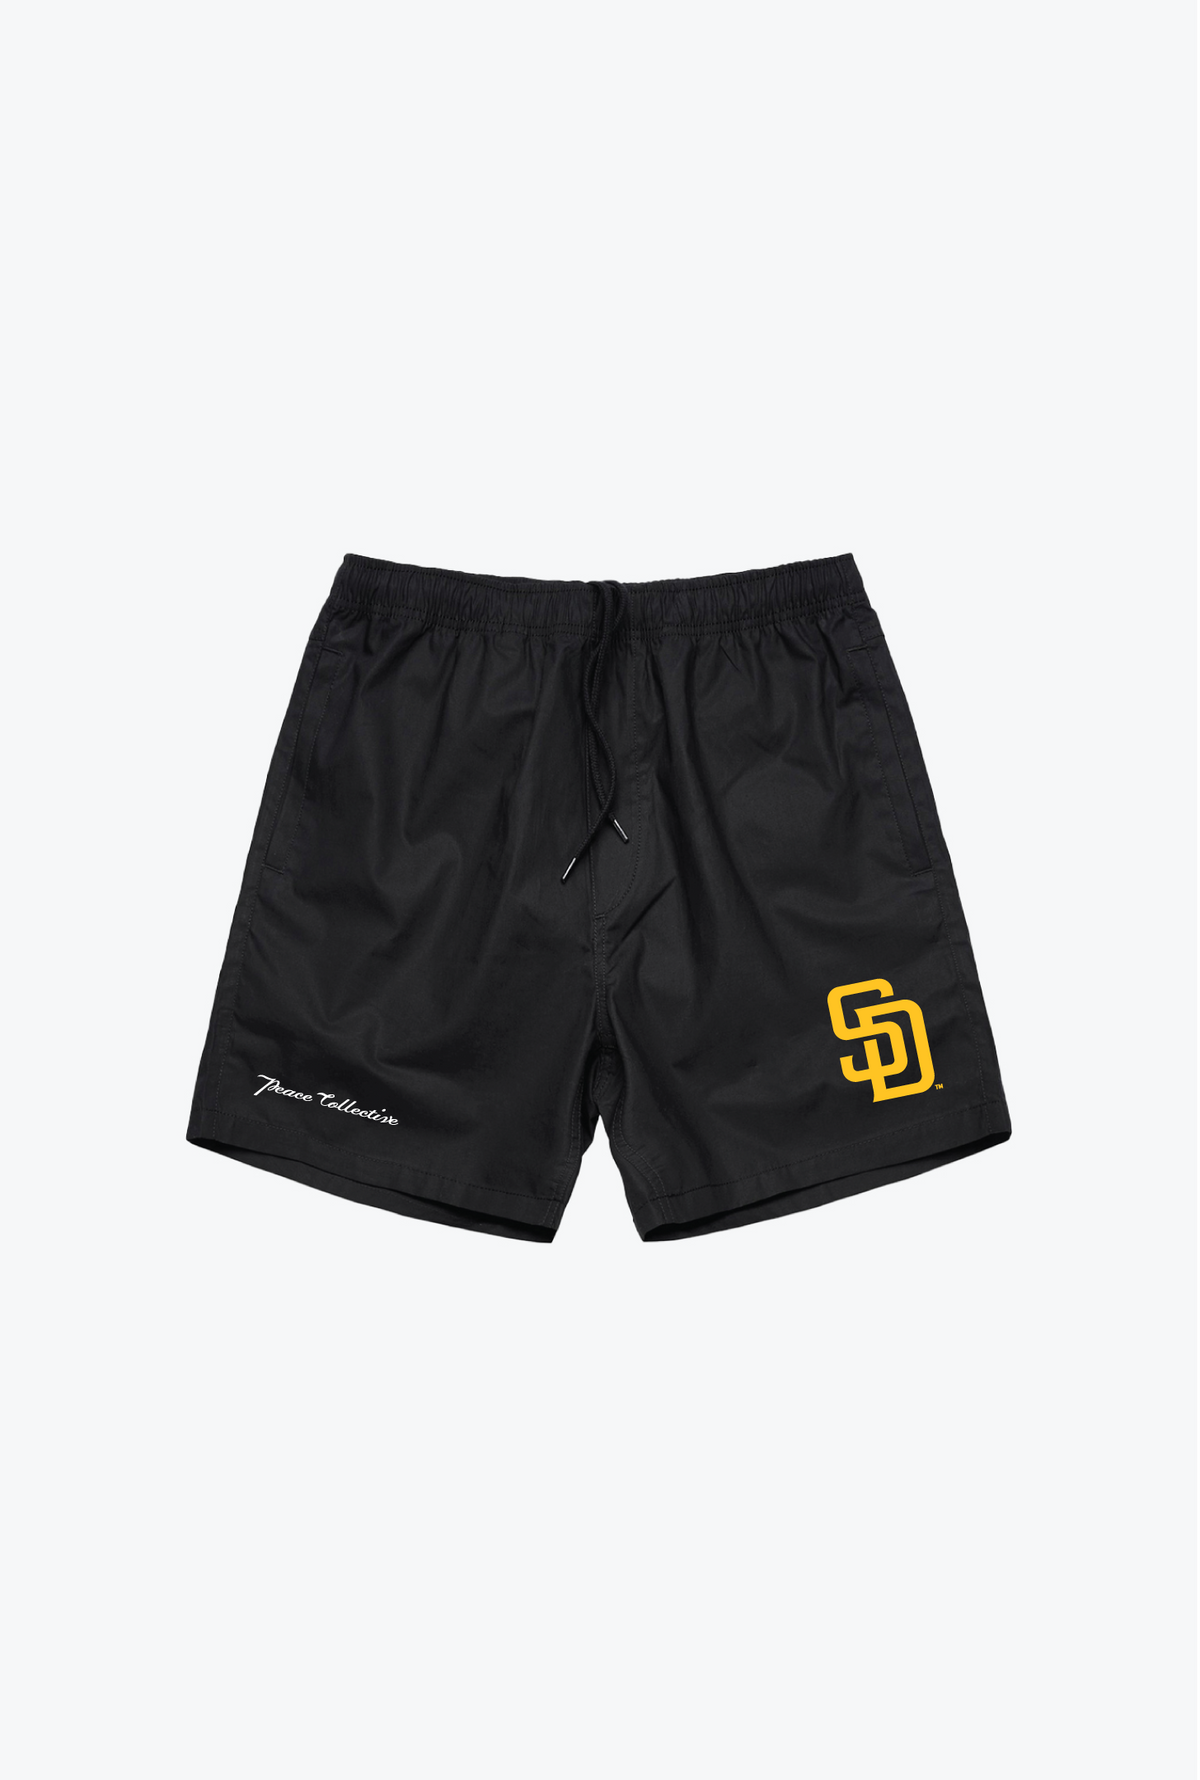 San Diego Padres Board Shorts - Black